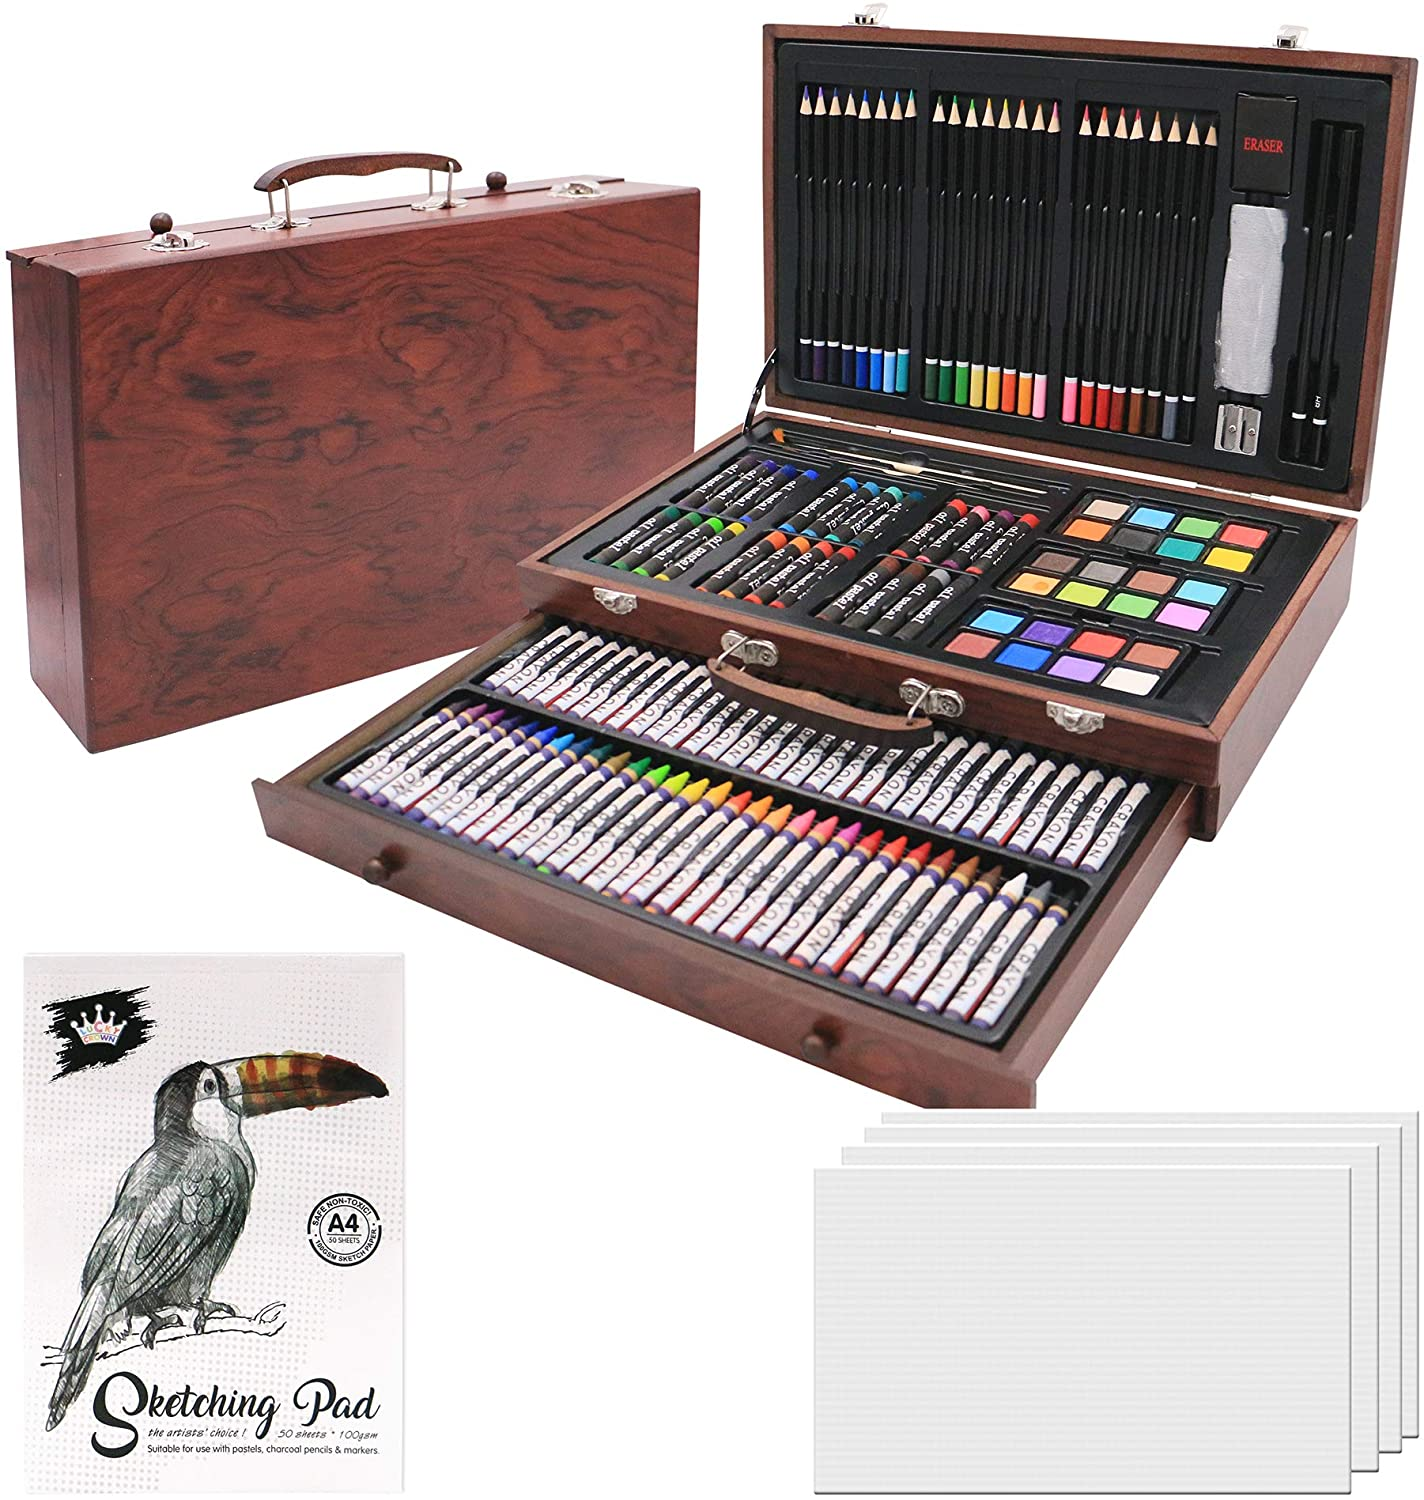 143 Piece Deluxe Art Set, Artist Drawing & Painting Set, Art Supplies with Wooden Case, Professional Art Kit Set